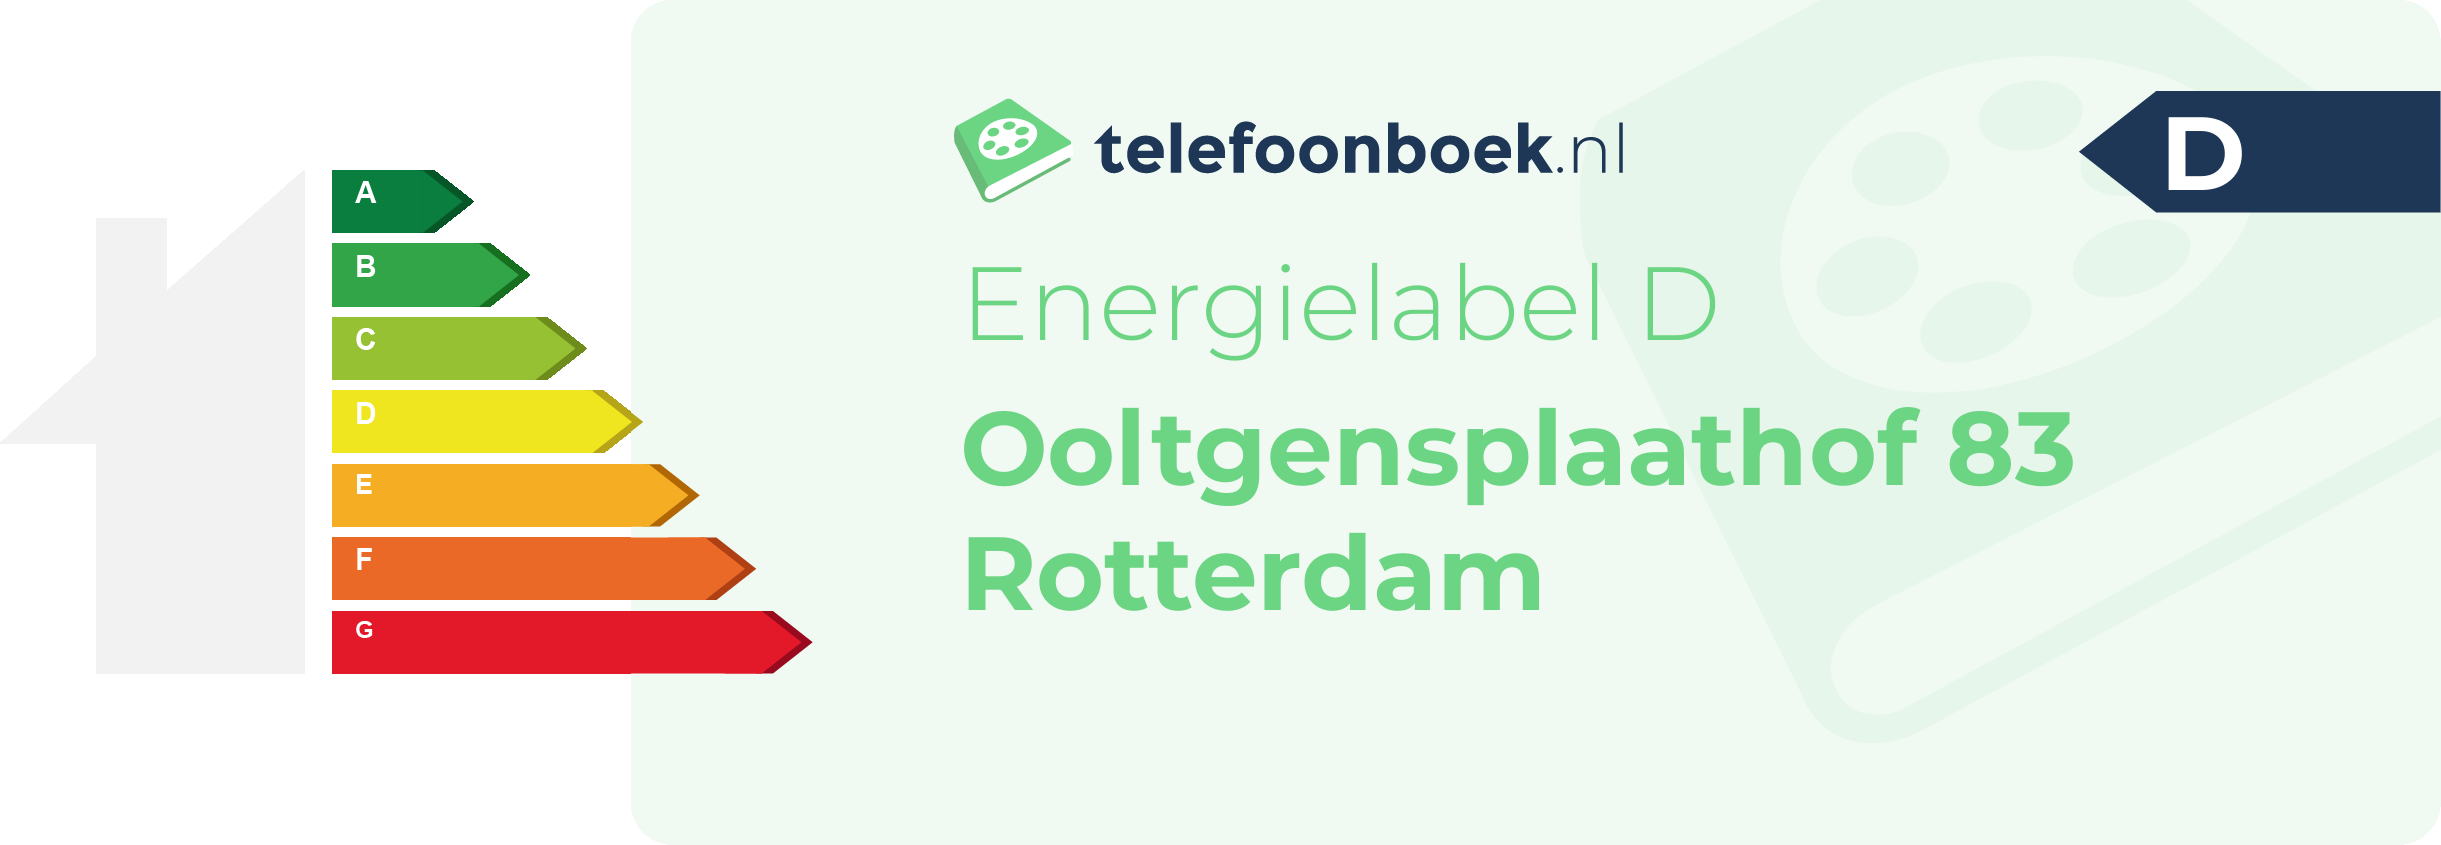 Energielabel Ooltgensplaathof 83 Rotterdam